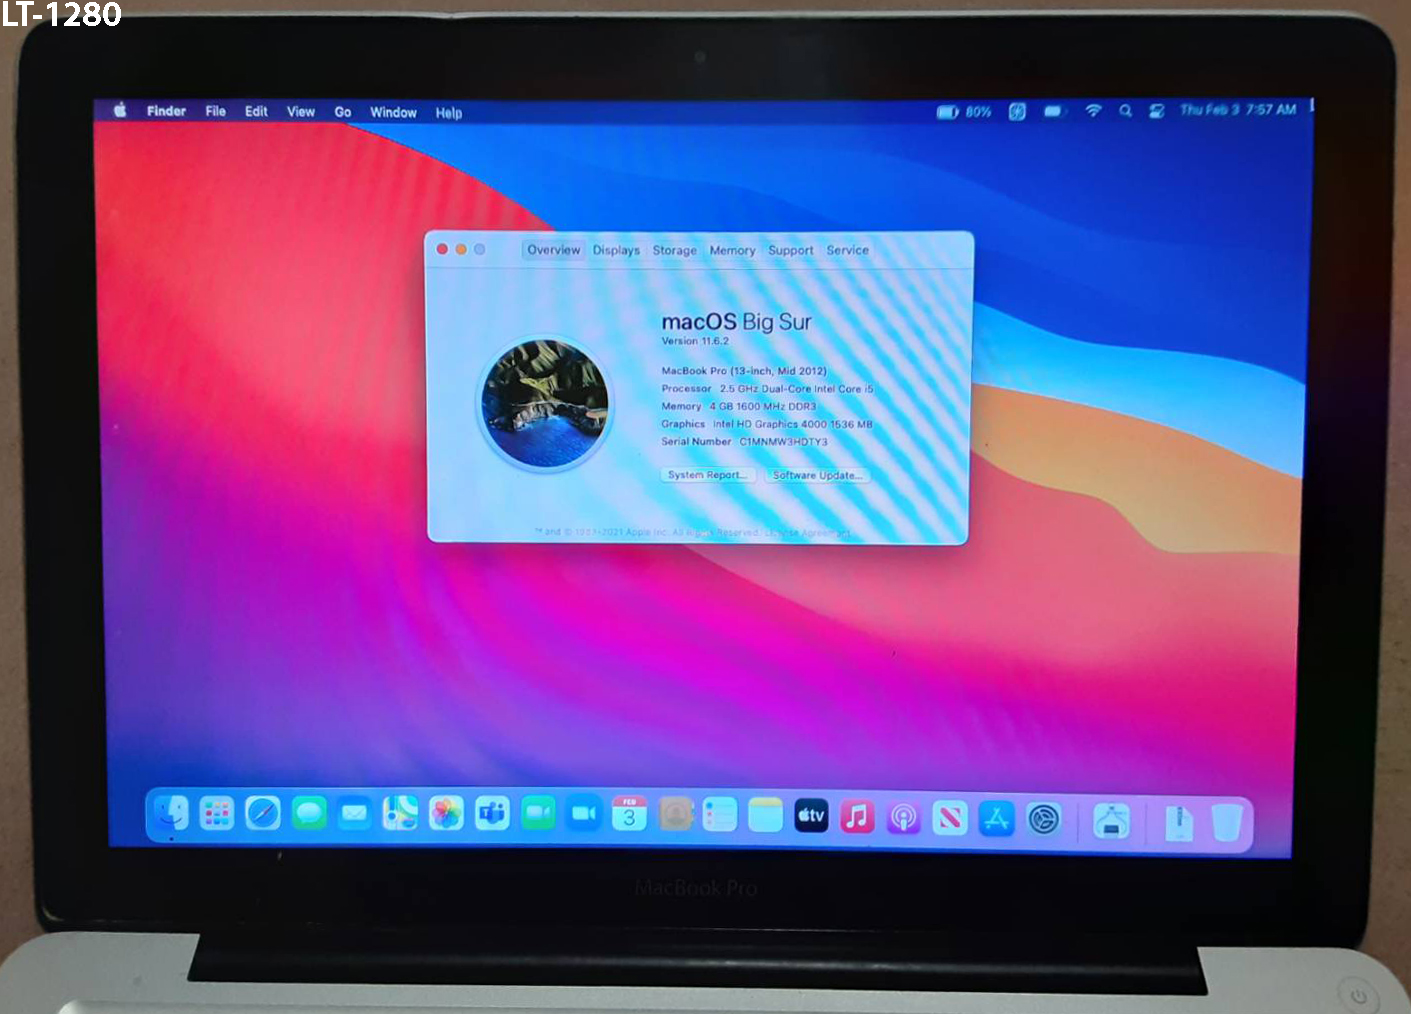 MacBook Pro (13インチ, Mid 2012) A1278